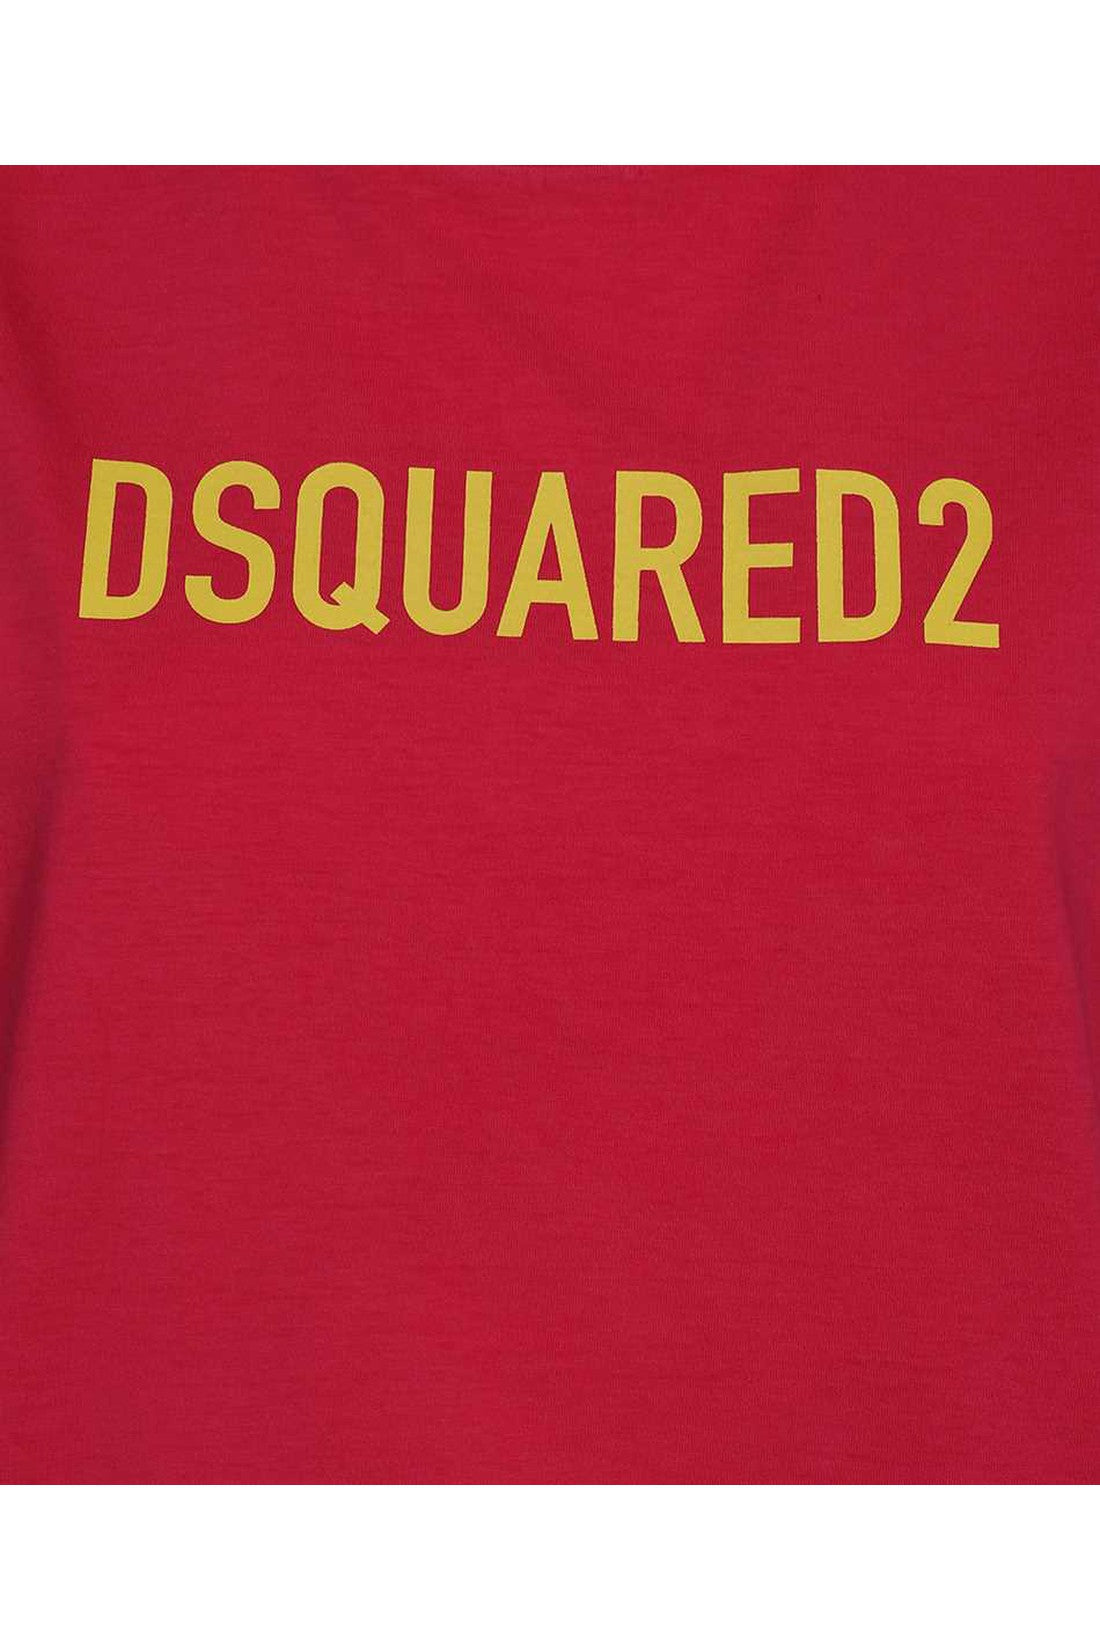 Dsquared2-OUTLET-SALE-Crew-neck-t-shirt-Shirts-ARCHIVE-COLLECTION-3_a23260ce-c180-4c1f-afbb-e11fd52e8bc3.jpg